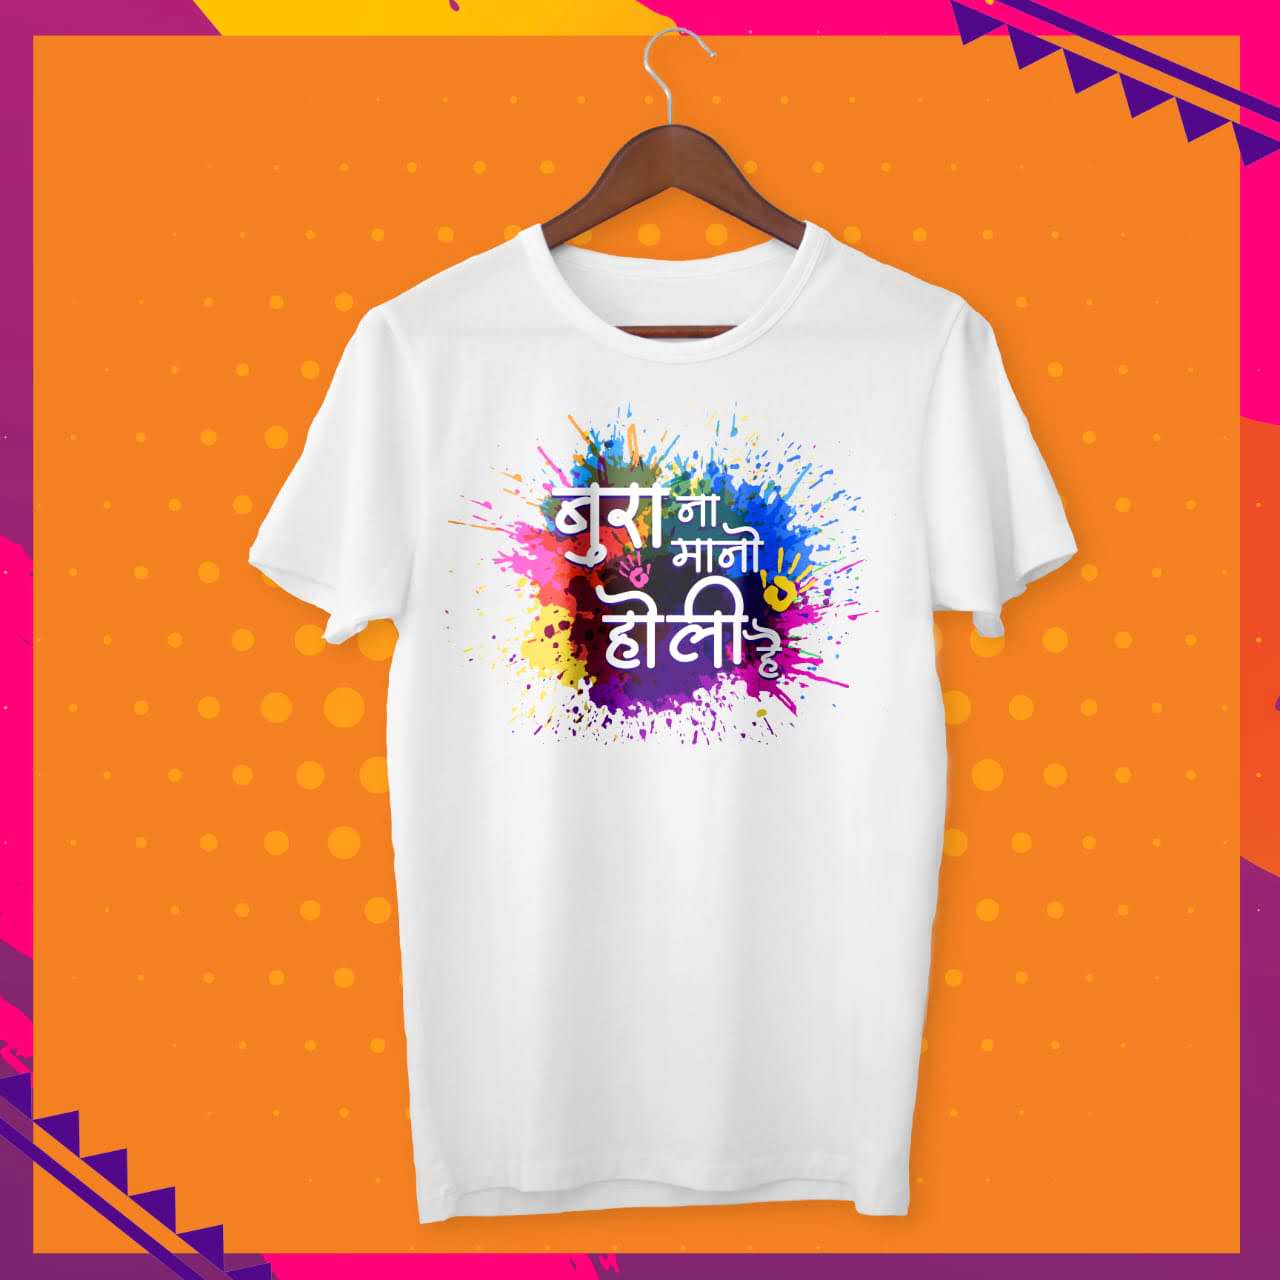 holi tshirts online in india